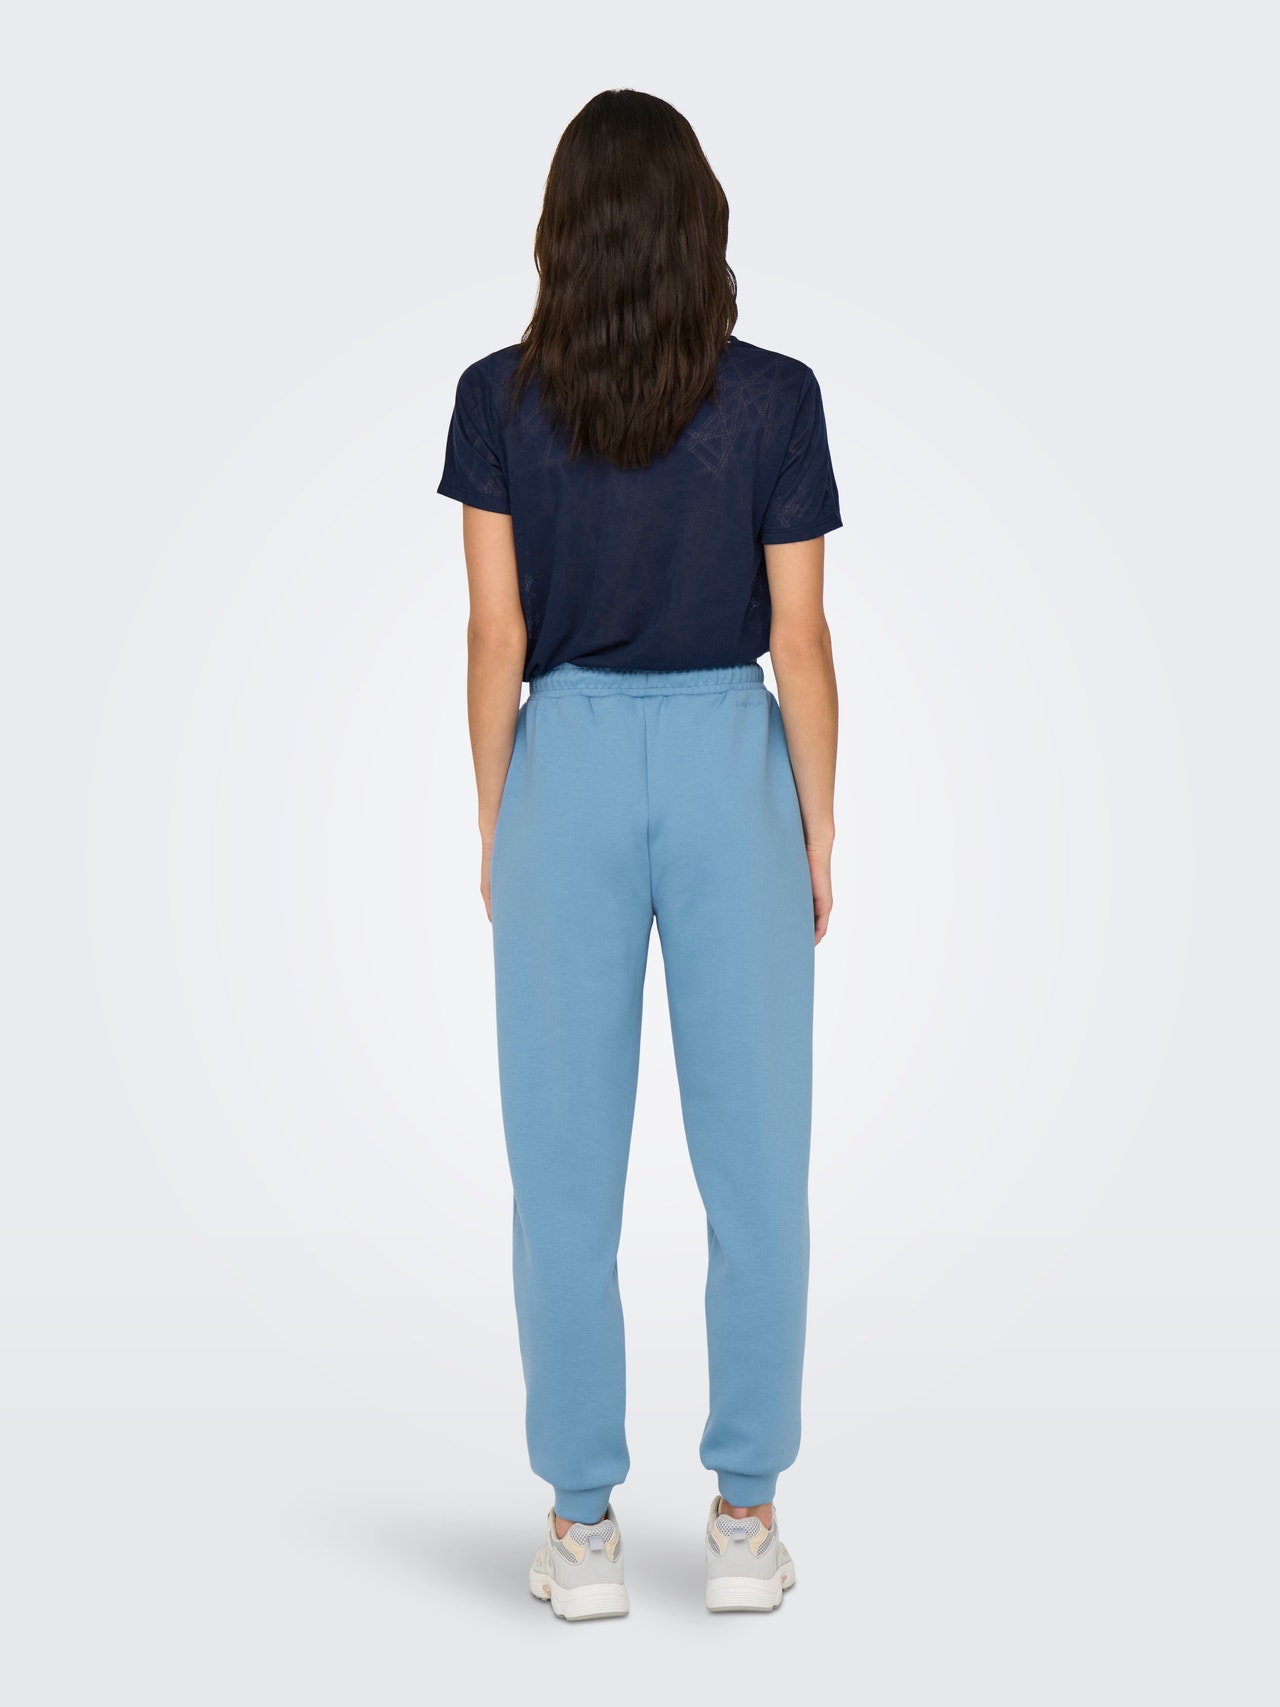 ONLY High waist training Sweatpants -Blissful Blue - 15230209